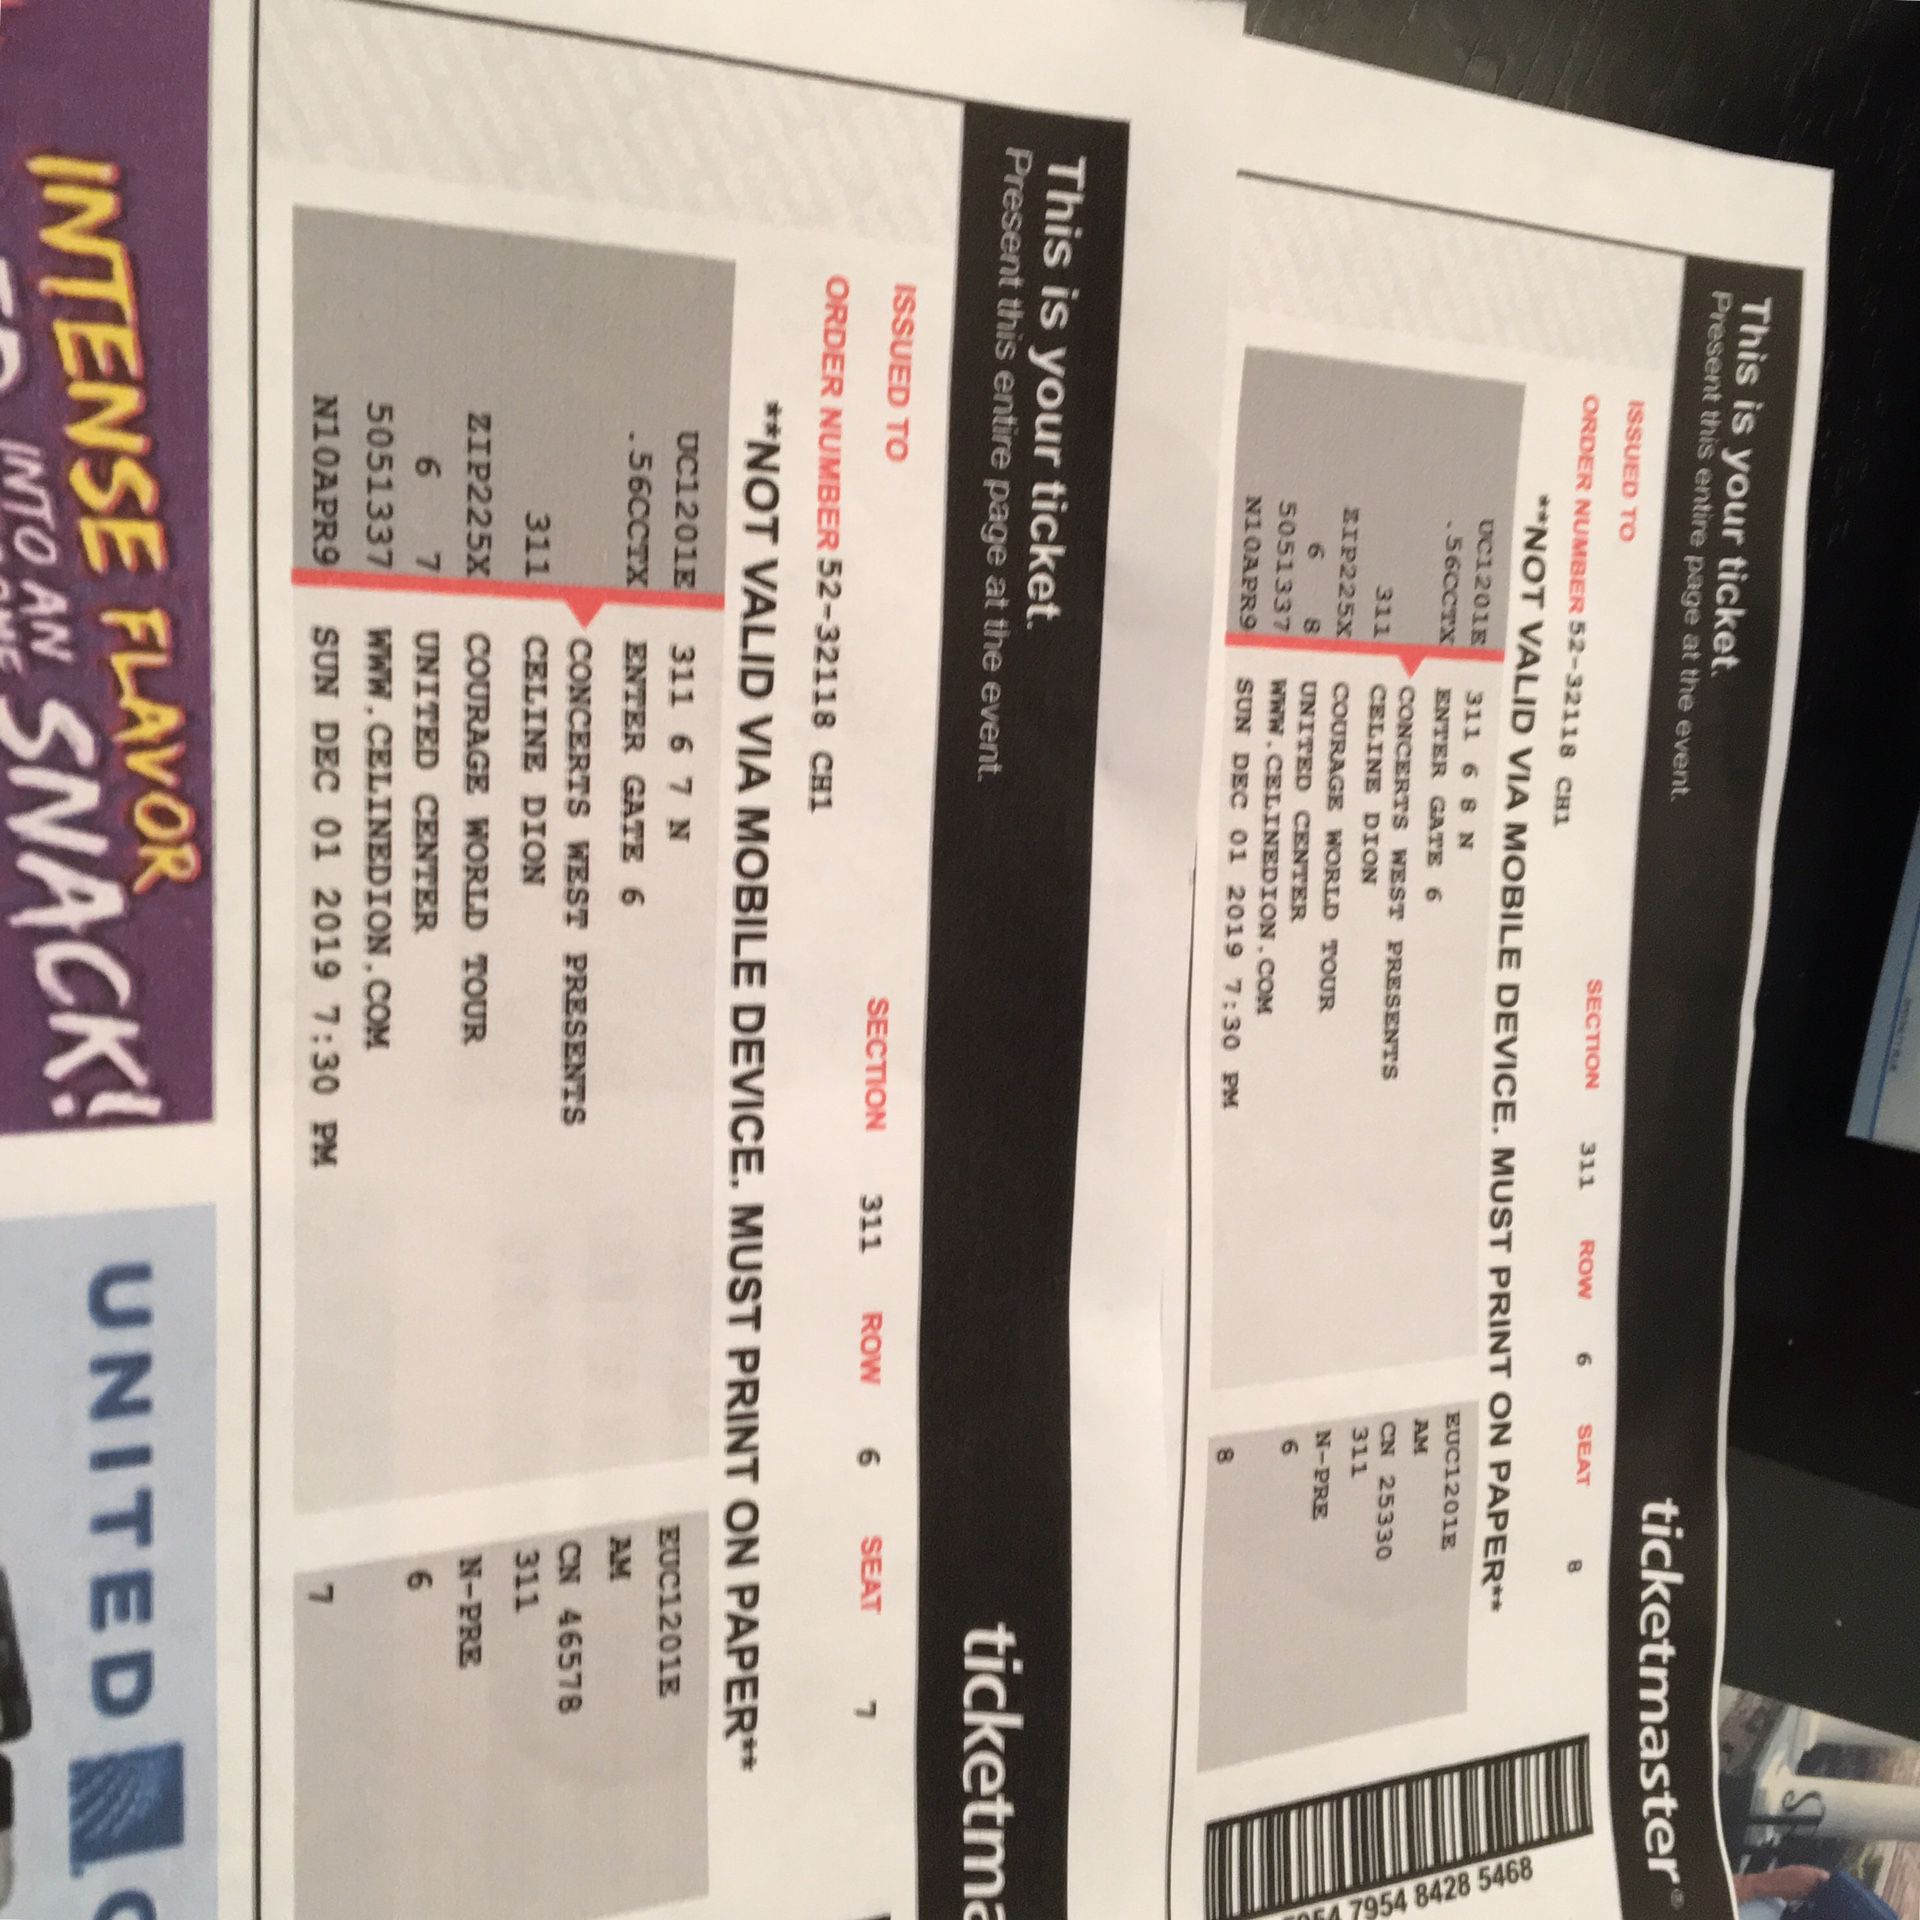 2 tickets to Celine Dion concert at United Center on December 1st.